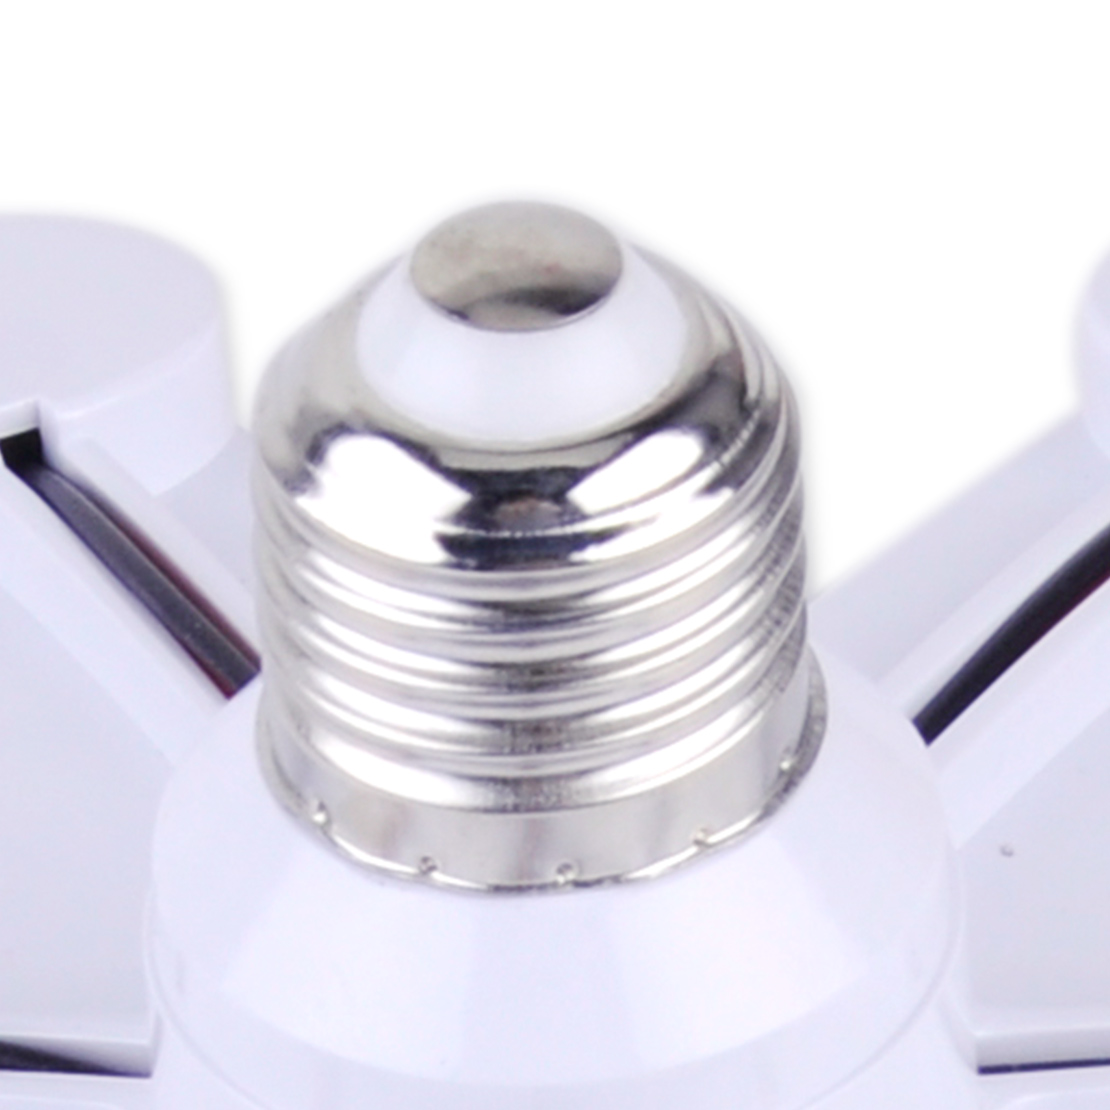 3A E27 Light Lamp Bulb Adapter Holder Converter Socket Base Splitter 7 in 1 Rated Current Voltage 12-265V 